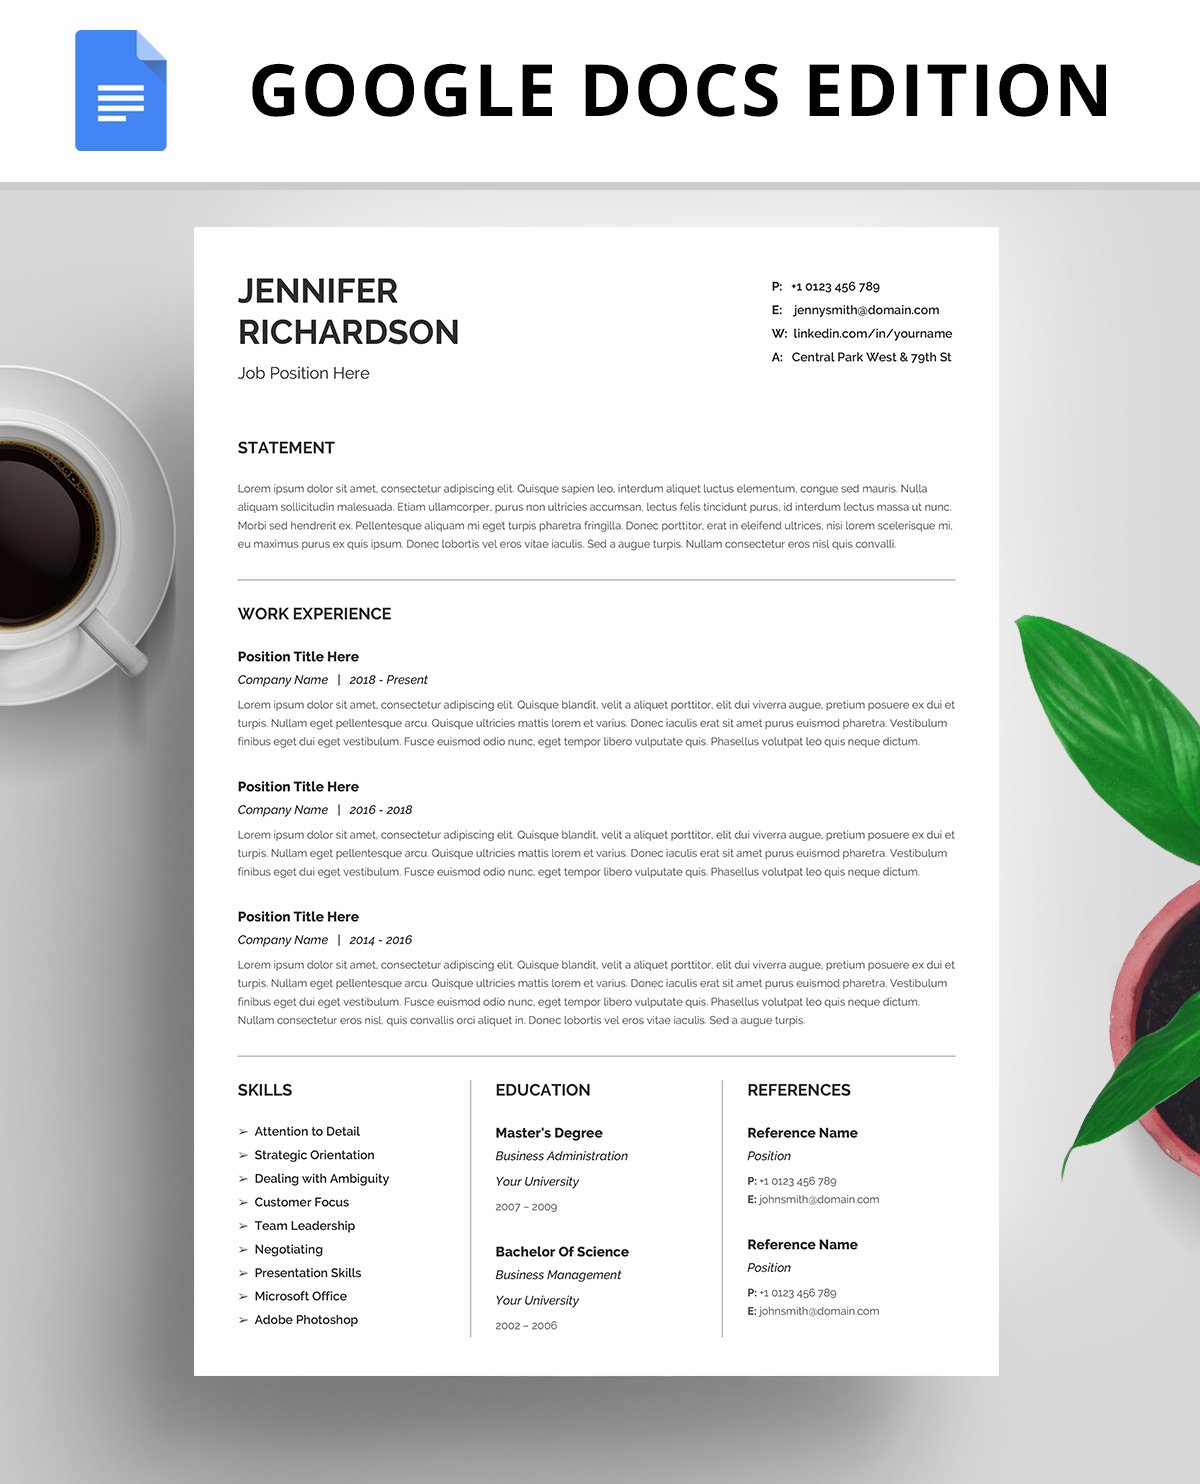 Resume Template, CV, Google Docs cover image.